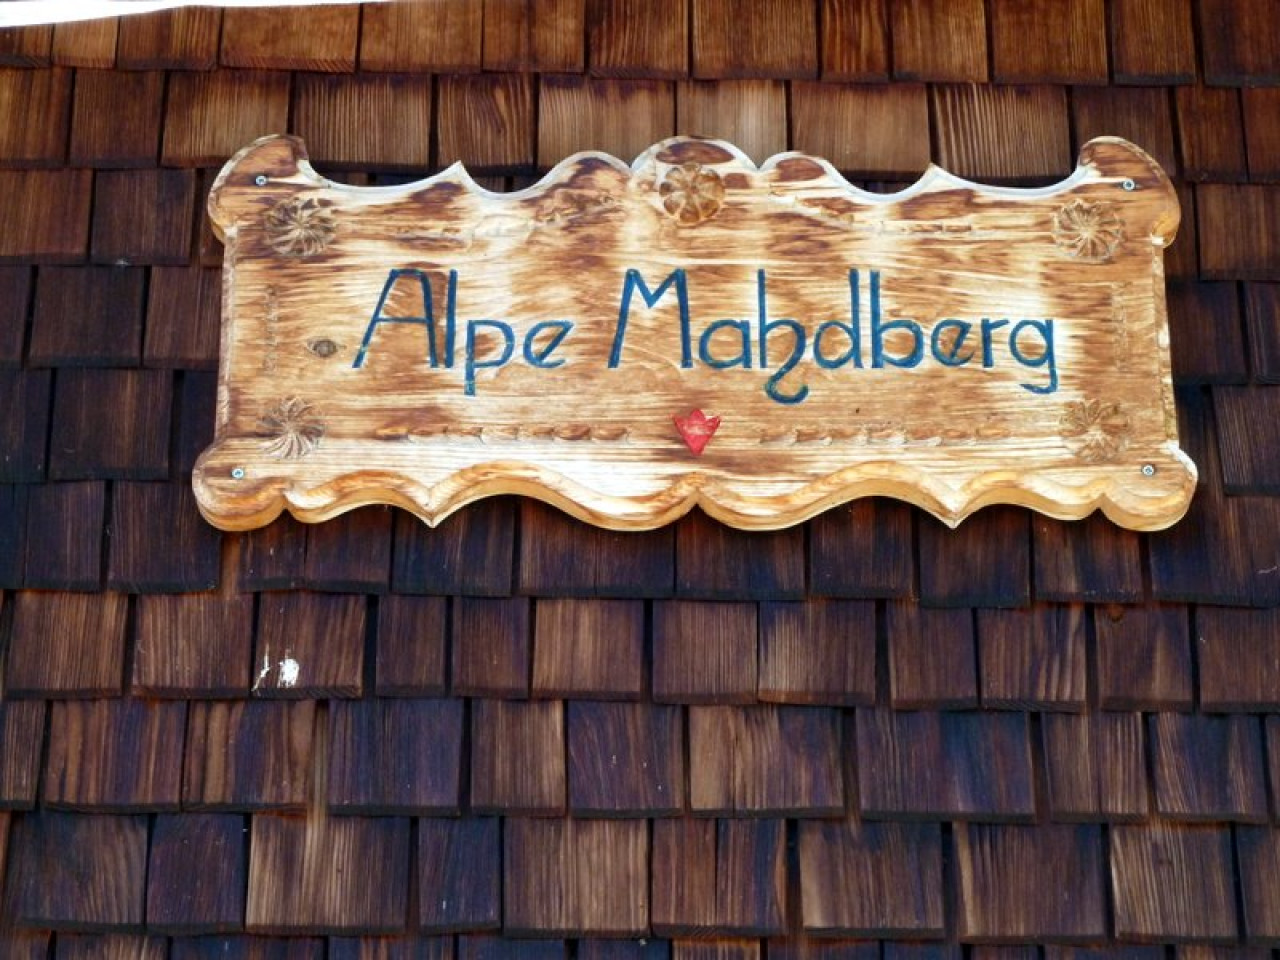  Schild Alpe Mahdberg